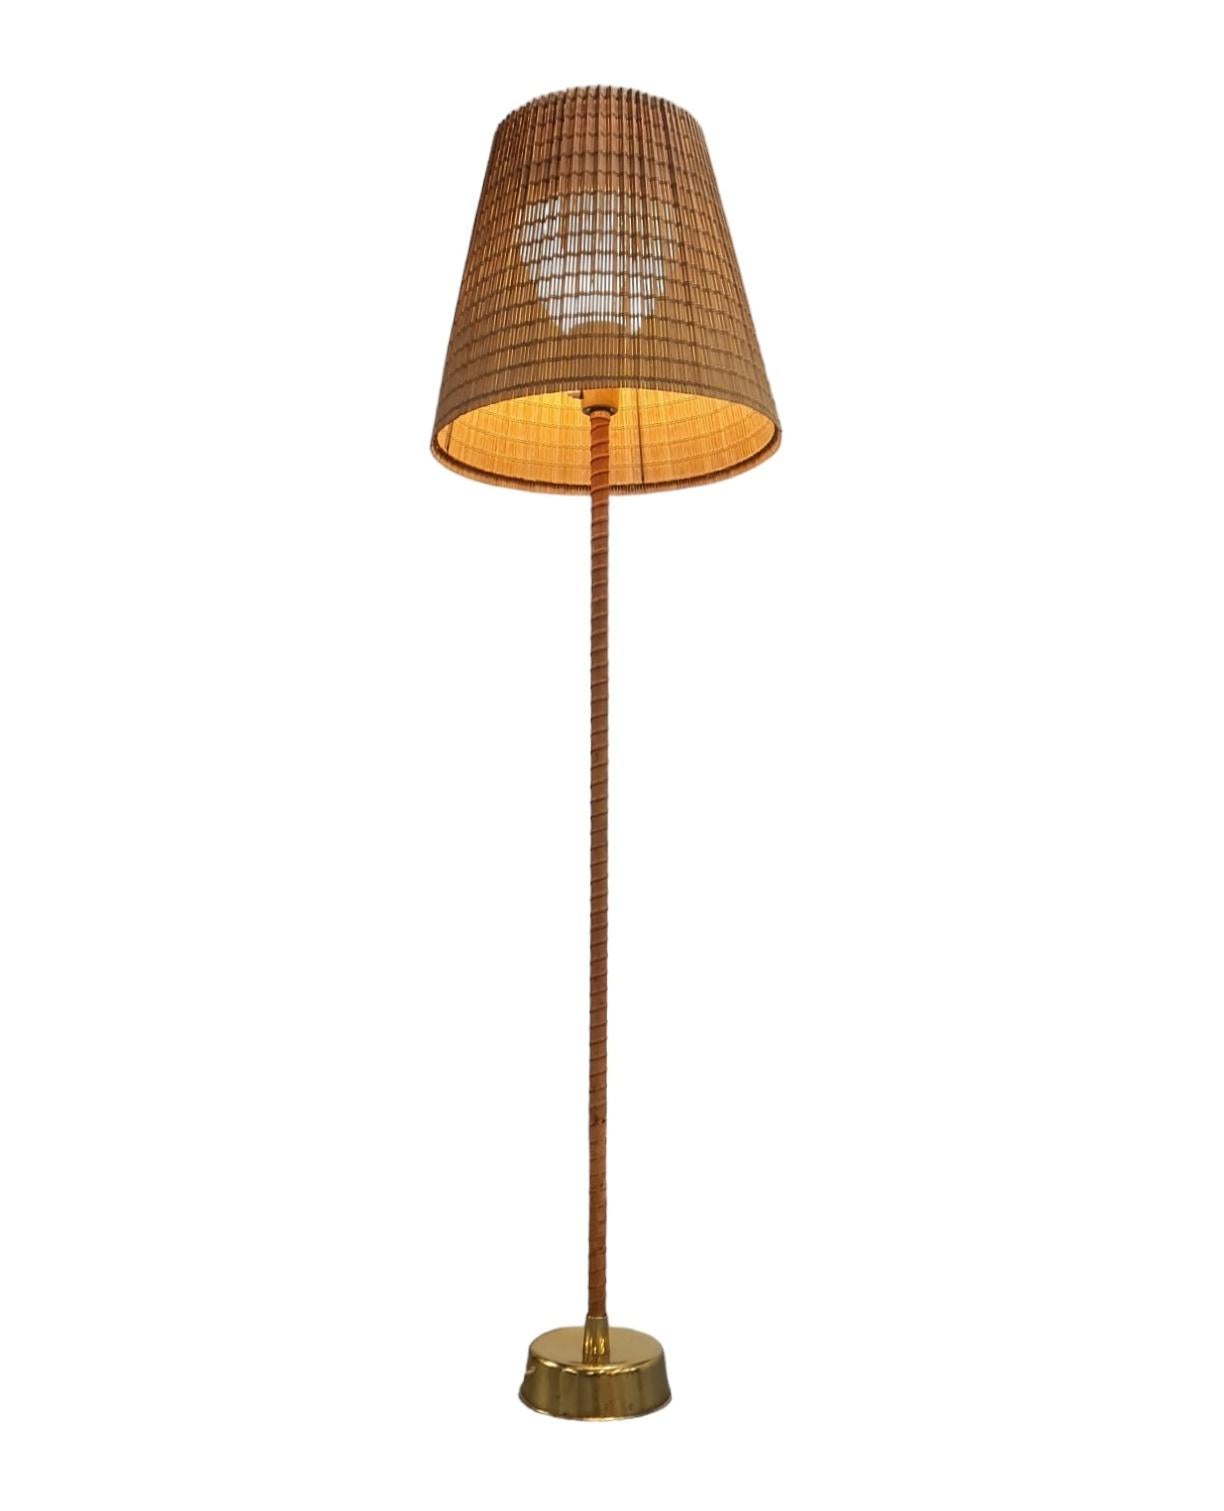 Brass Lisa Johansson-Papé Ihanne Floor Lamp, Orno for Stockmann 1960s For Sale